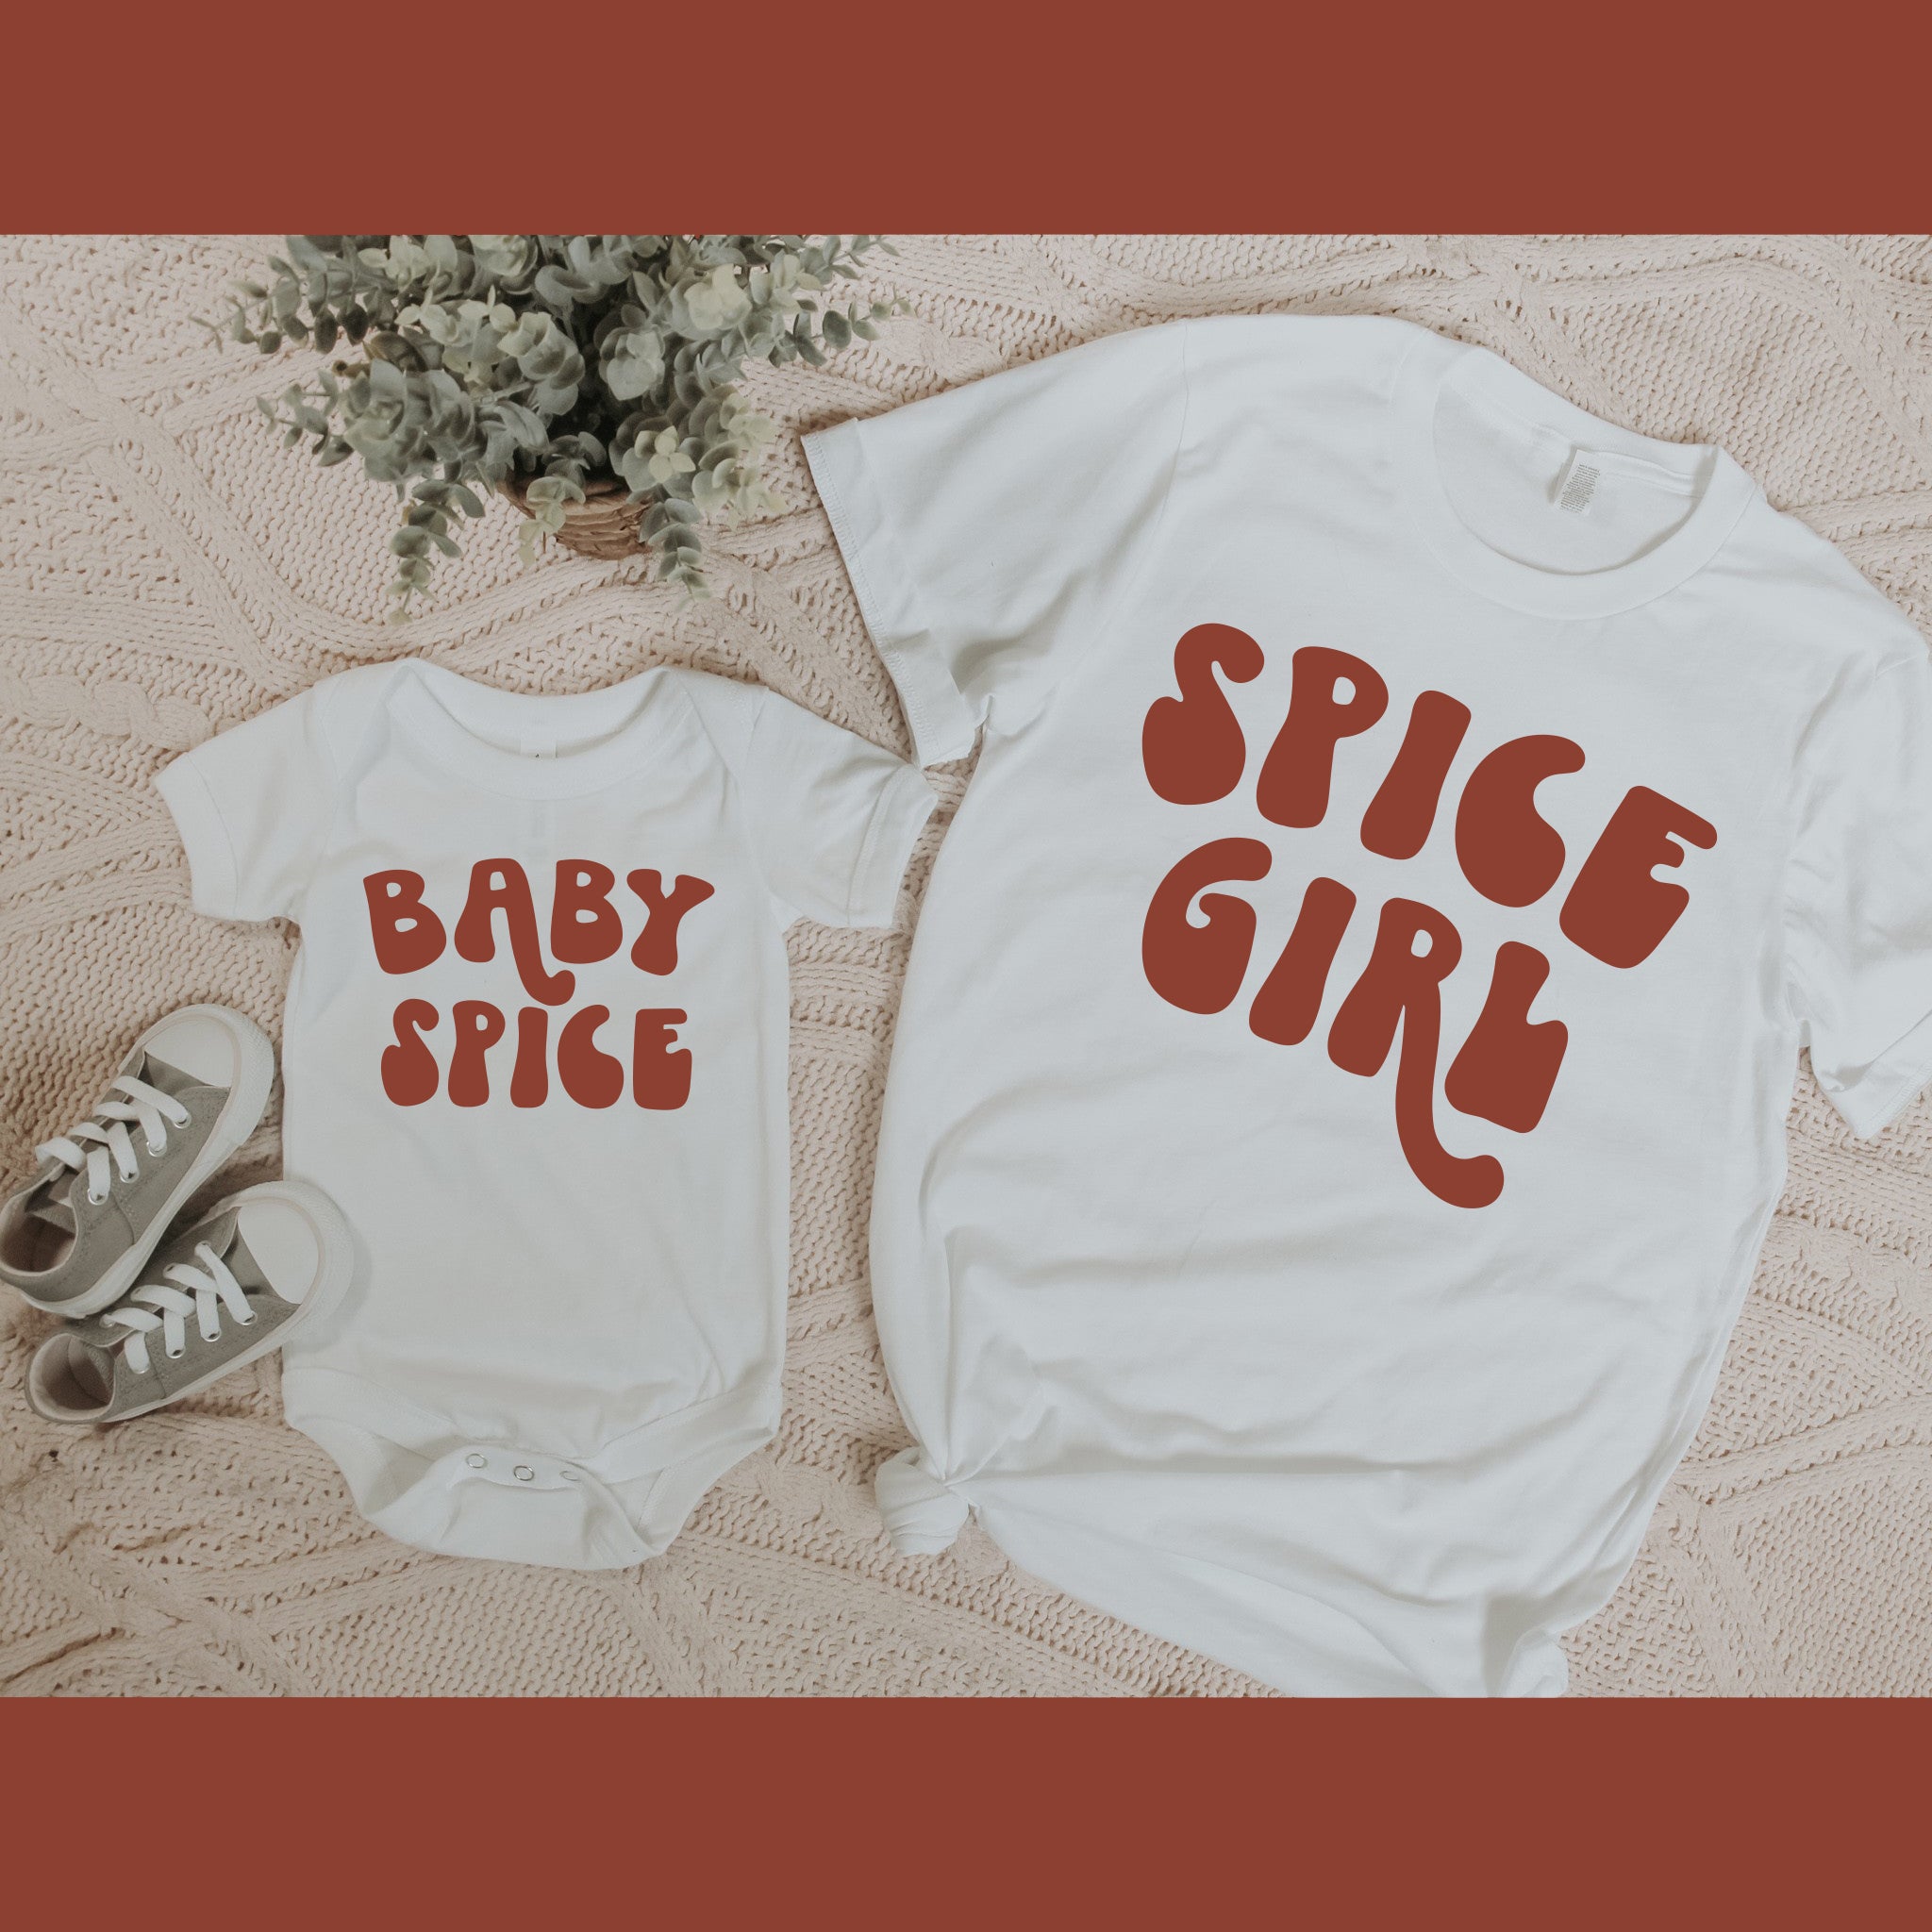 baby spice shirt